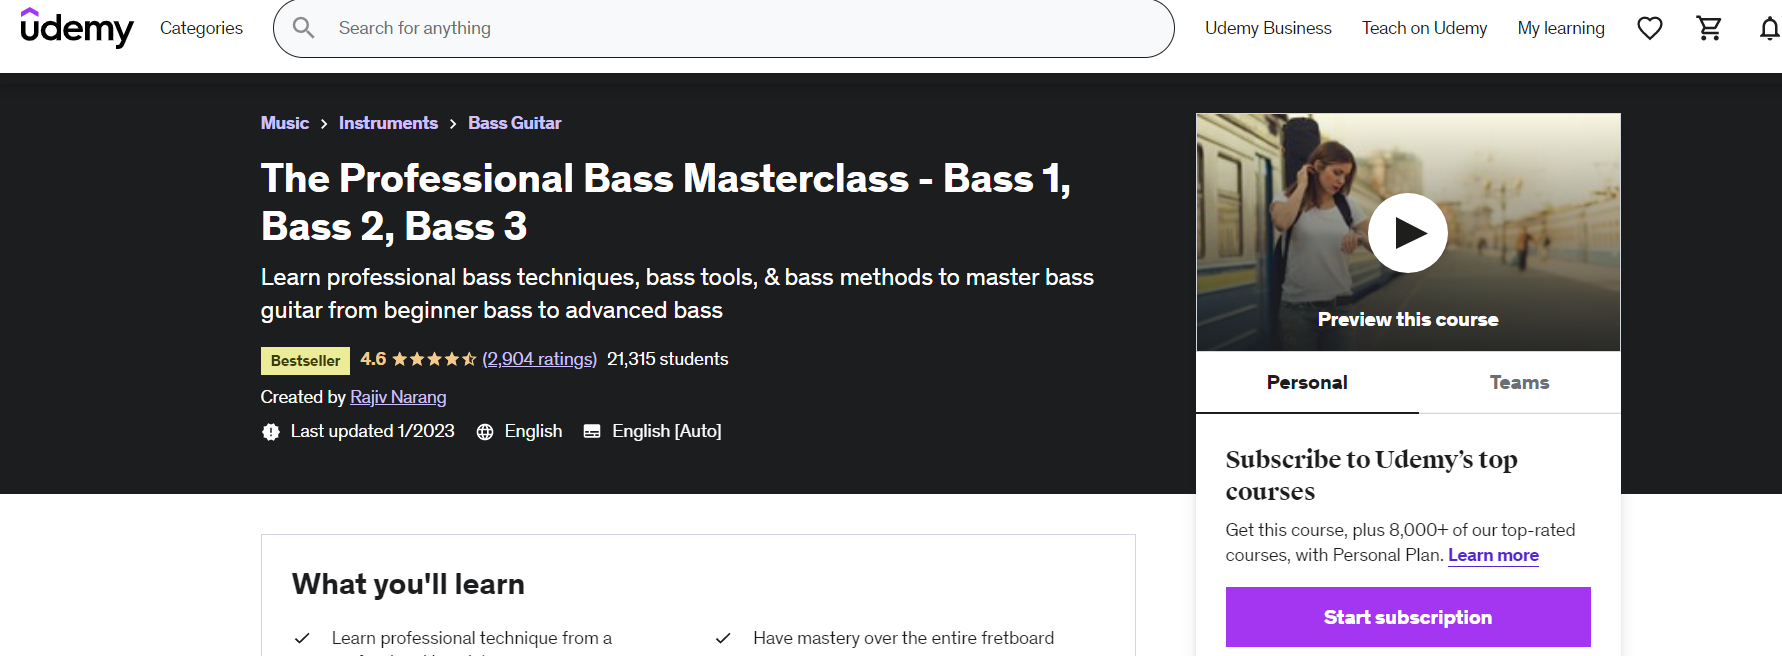 The Professional Bass Masterclass